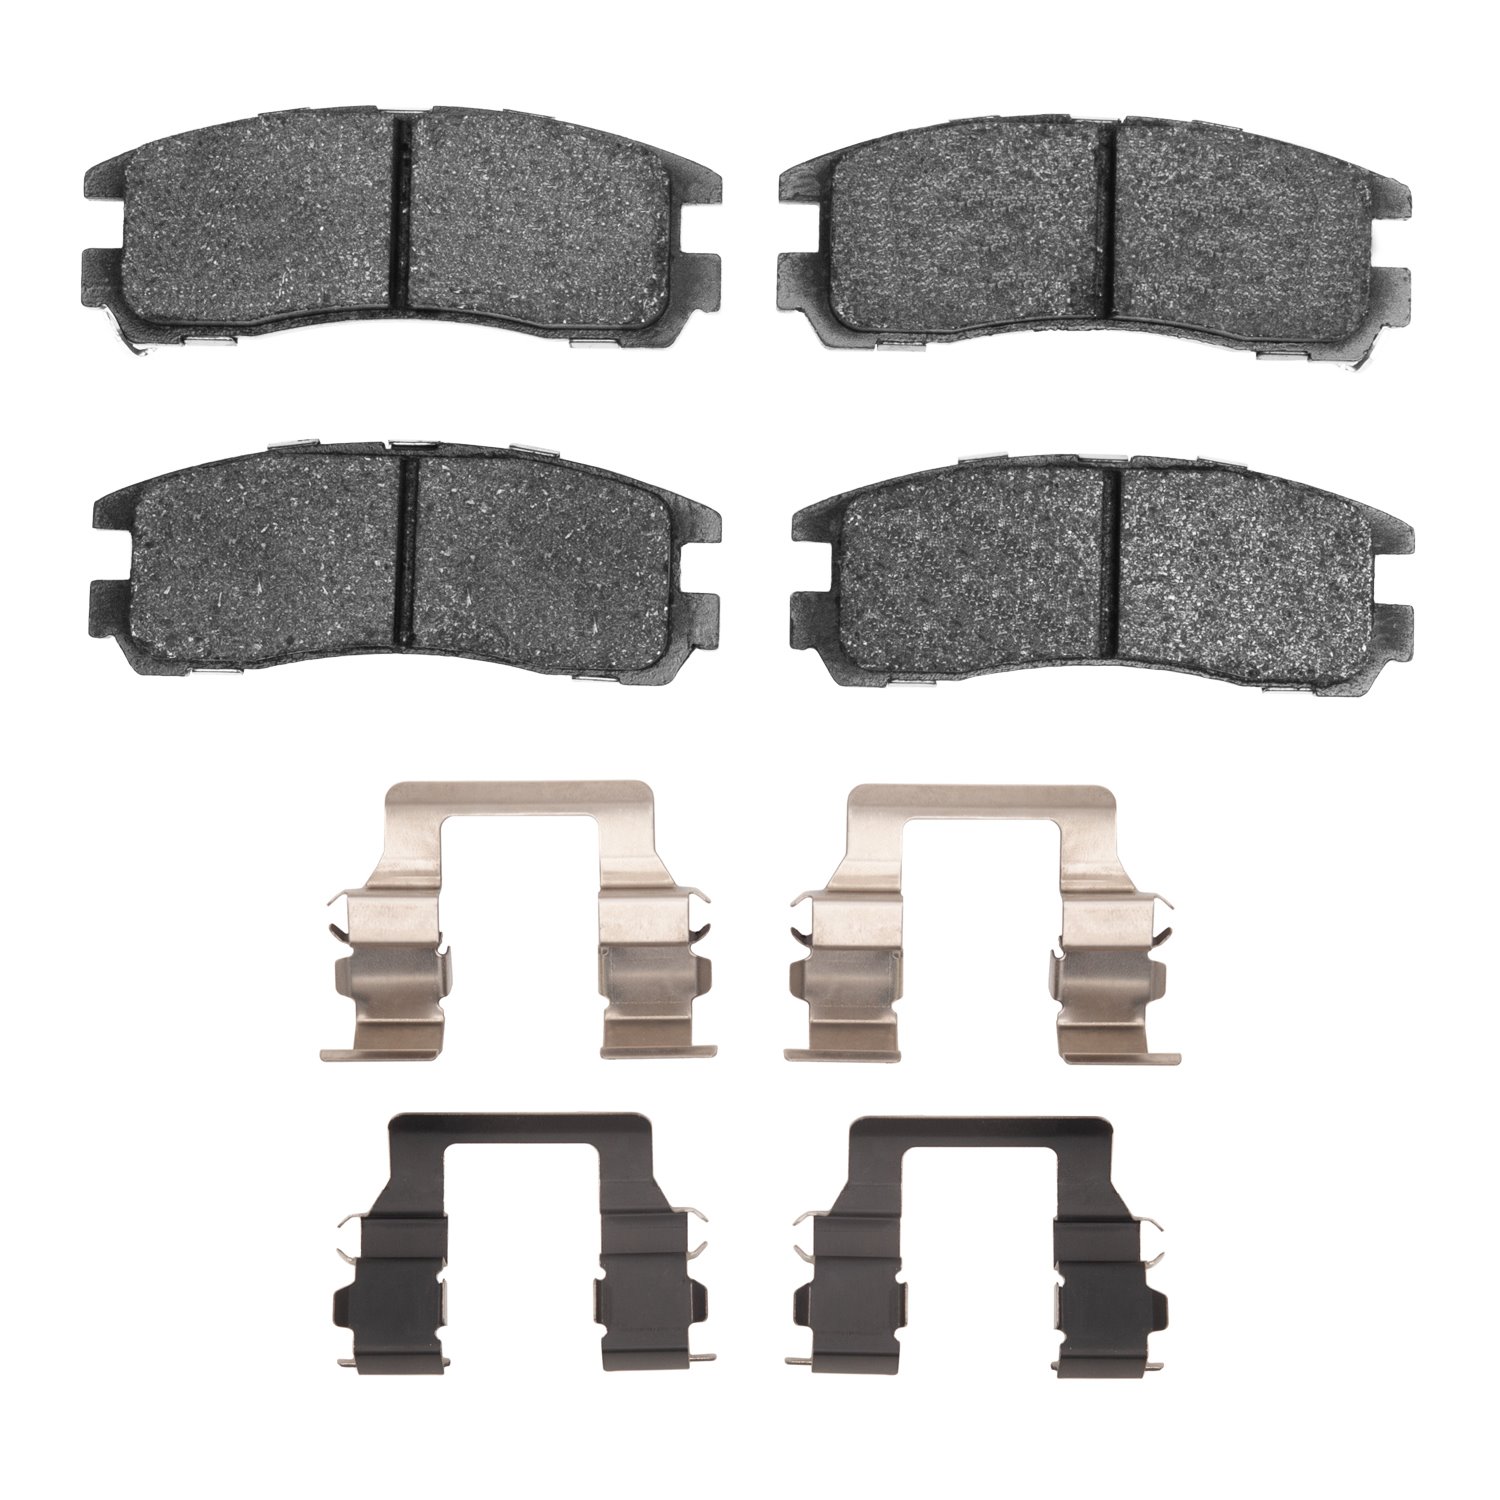 1310-0383-02 3000-Series Ceramic Brake Pads & Hardware Kit, 1988-1999 Multiple Makes/Models, Position: Rear